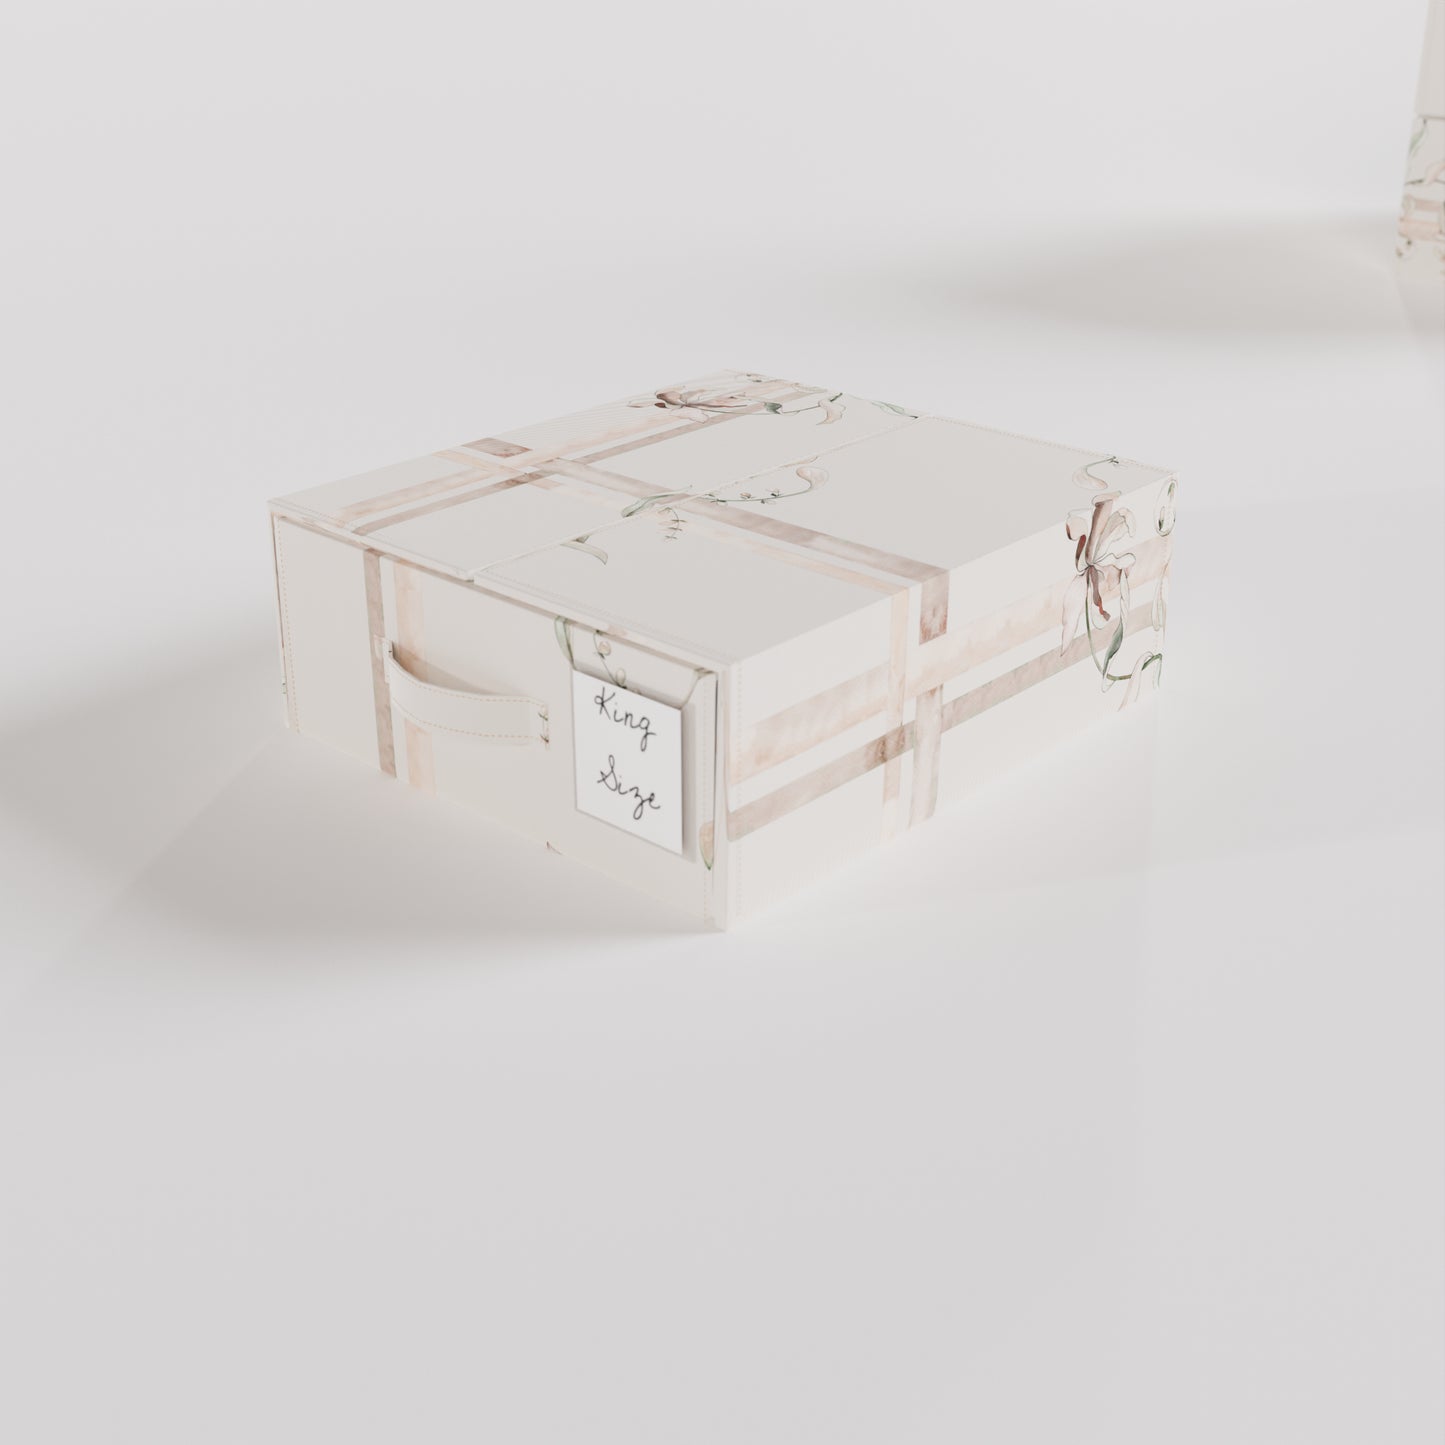 Isabel & Celine Foldable Bedding Storage Box Premium Vegan Leather 4 color set Organiser Collapsible